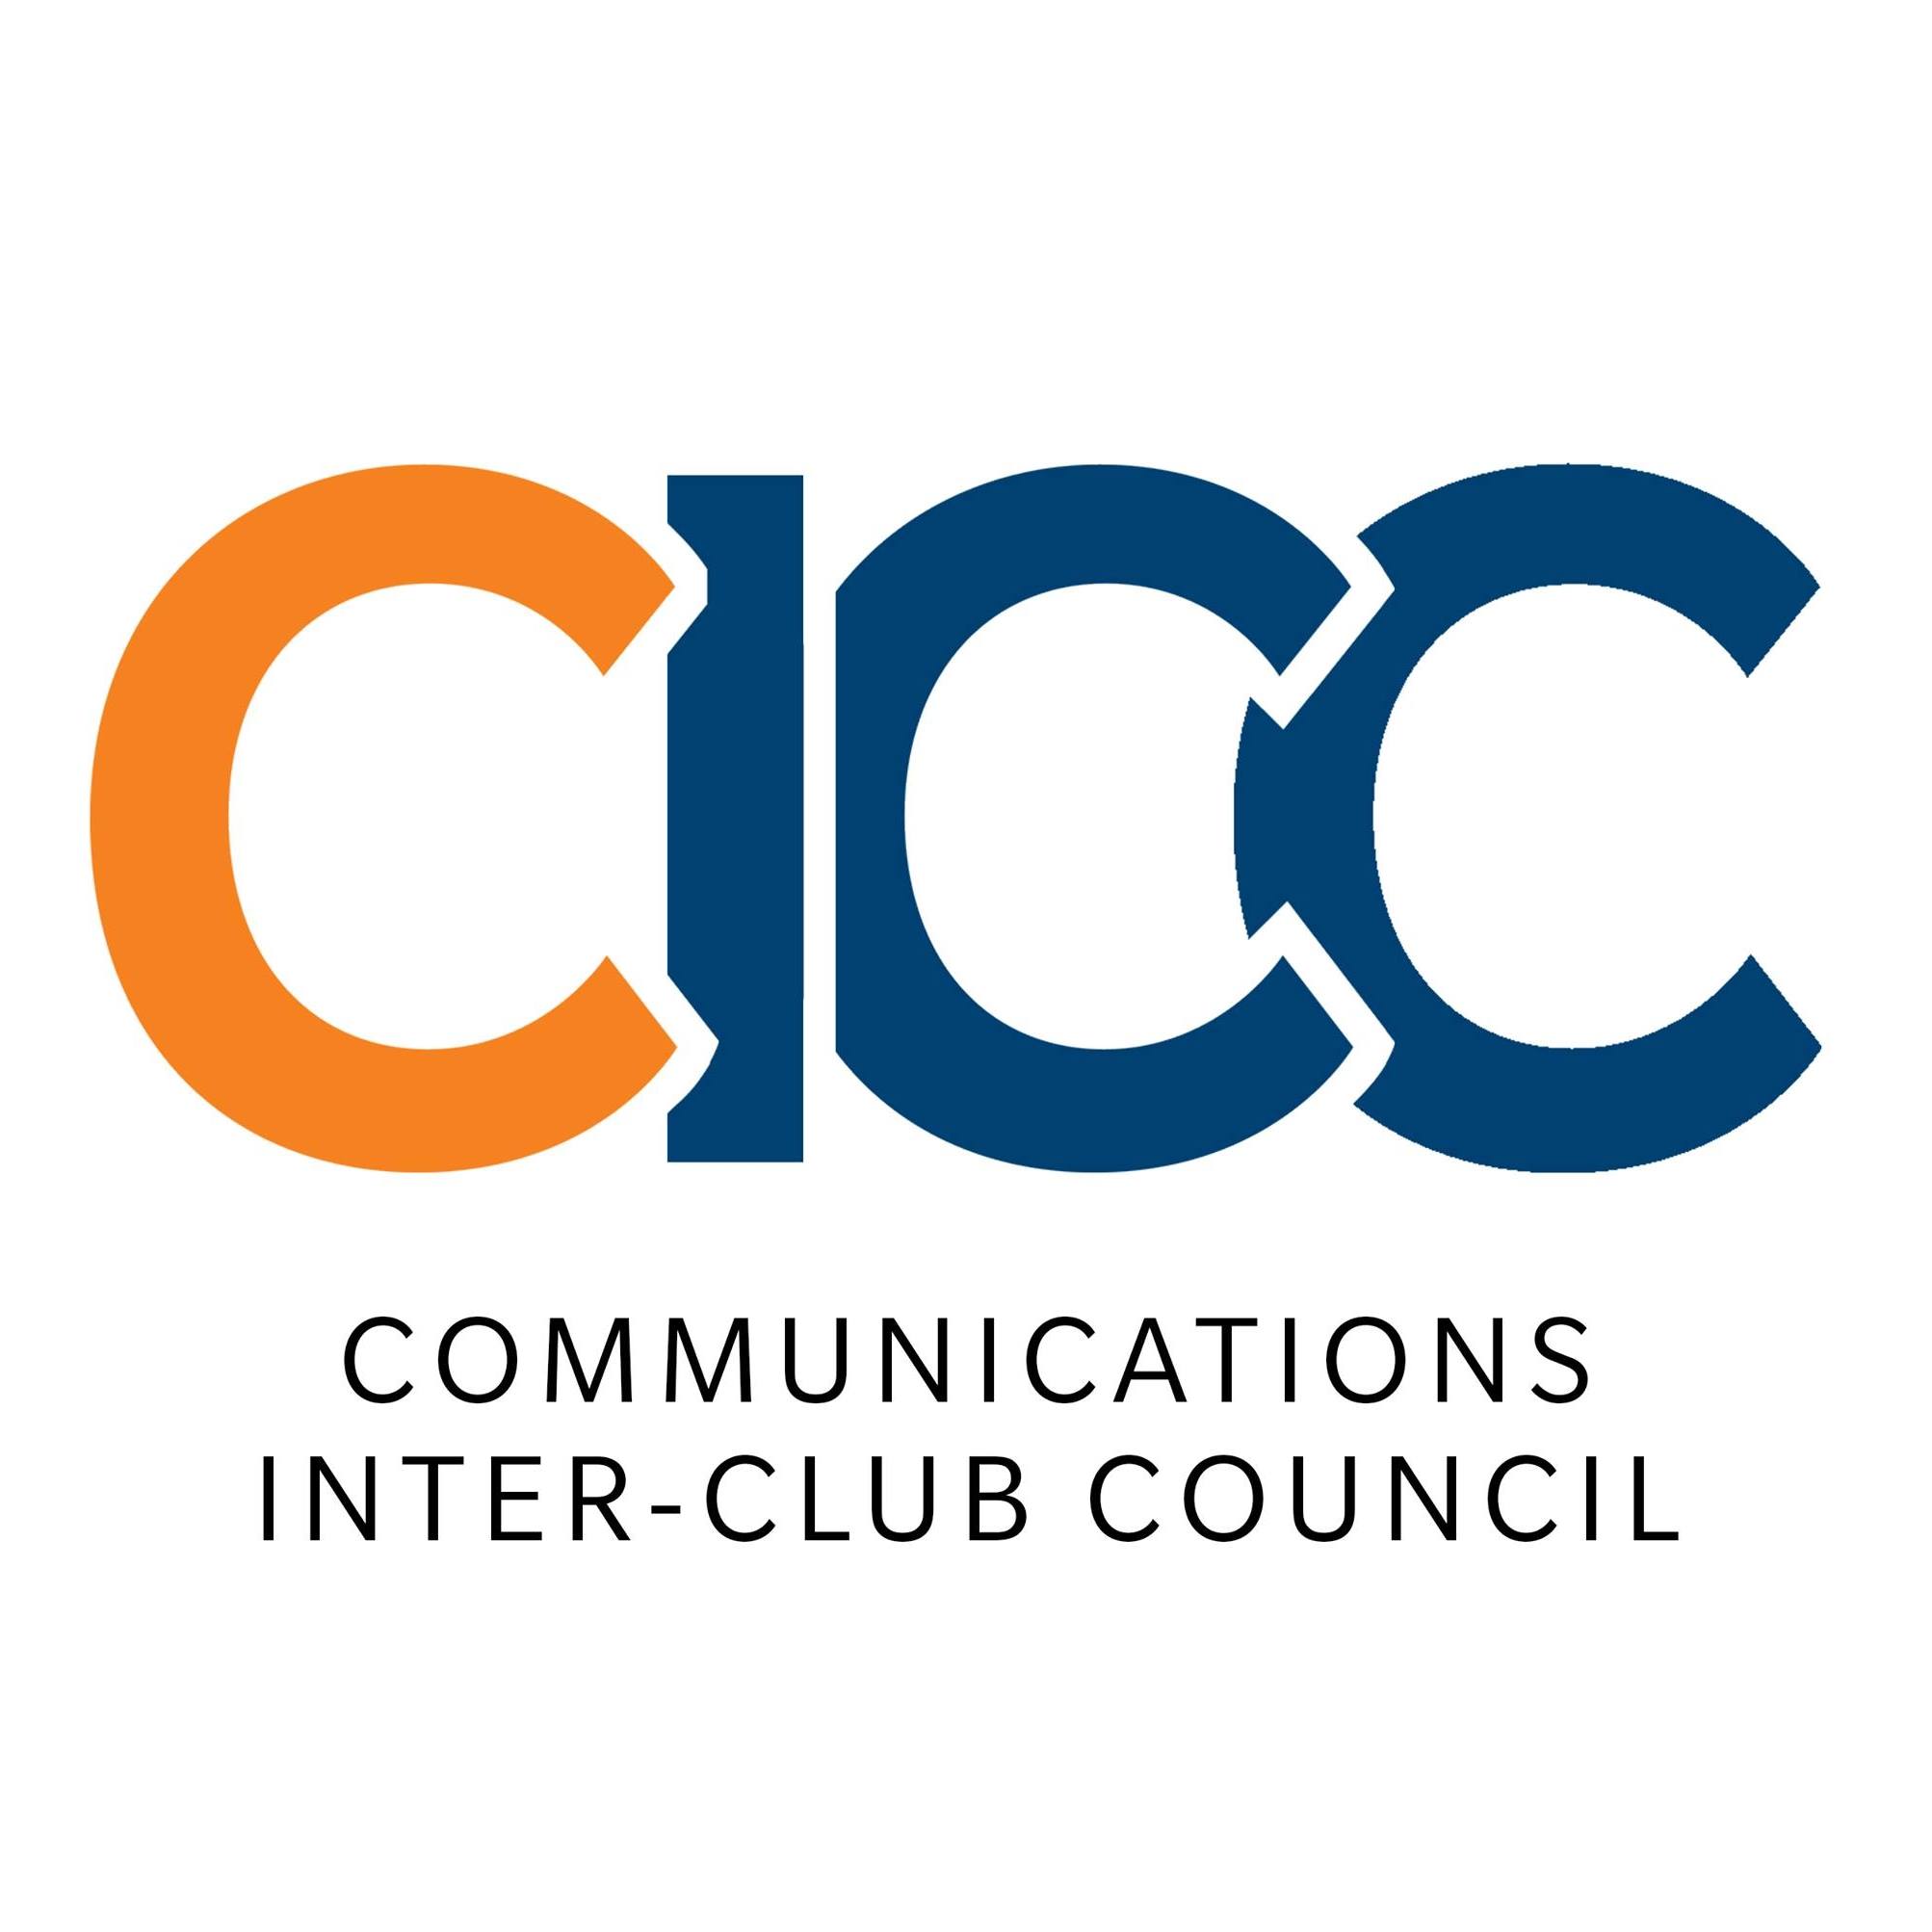 CICC image